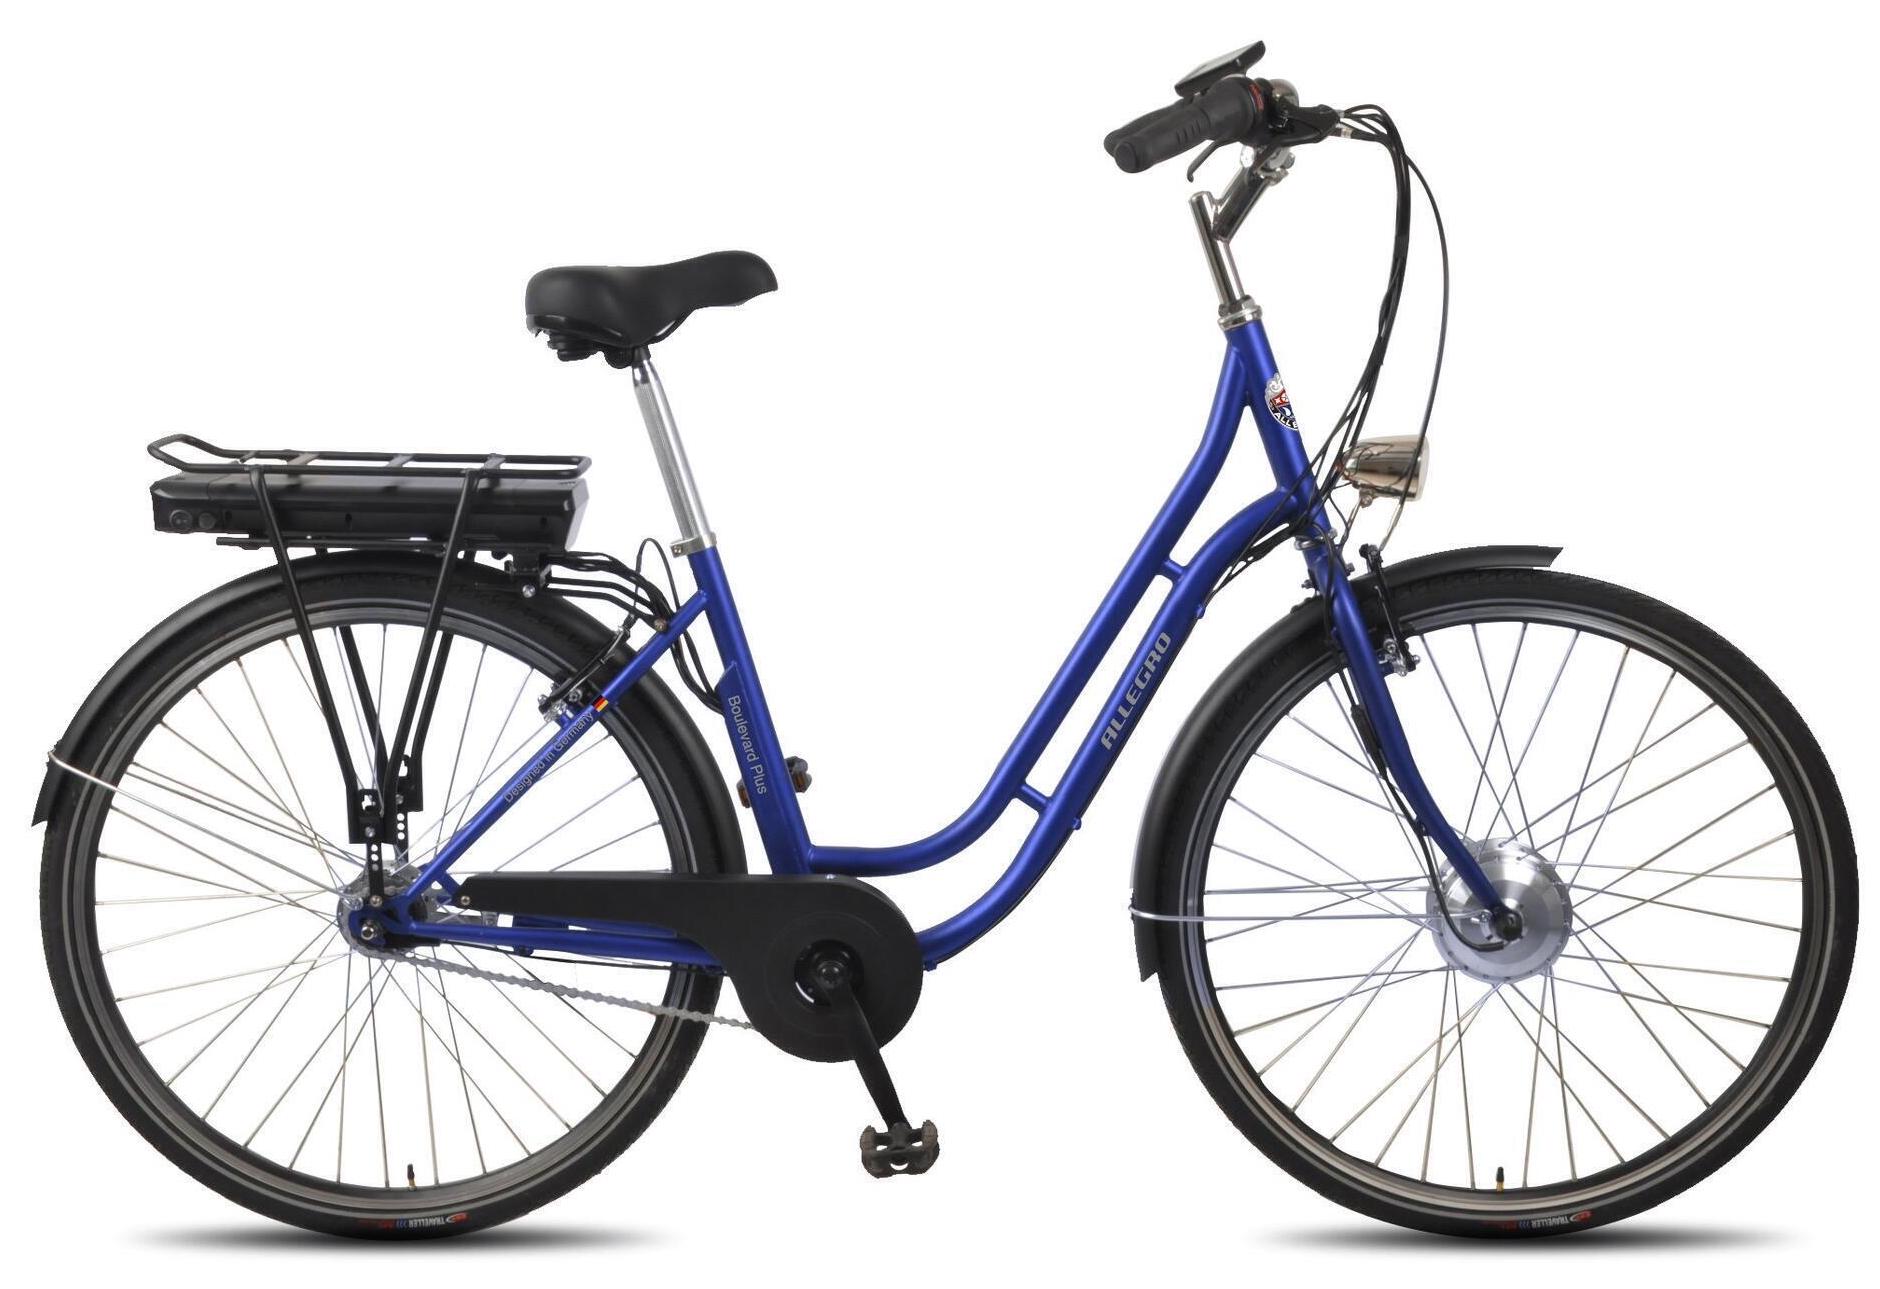 E-Bike-Deal: Allegro Boulevard 7 Plus Citybike dank 23% Rabatt für  besonders günstige 699 Euro bei Decathlon - Notebookcheck.com News